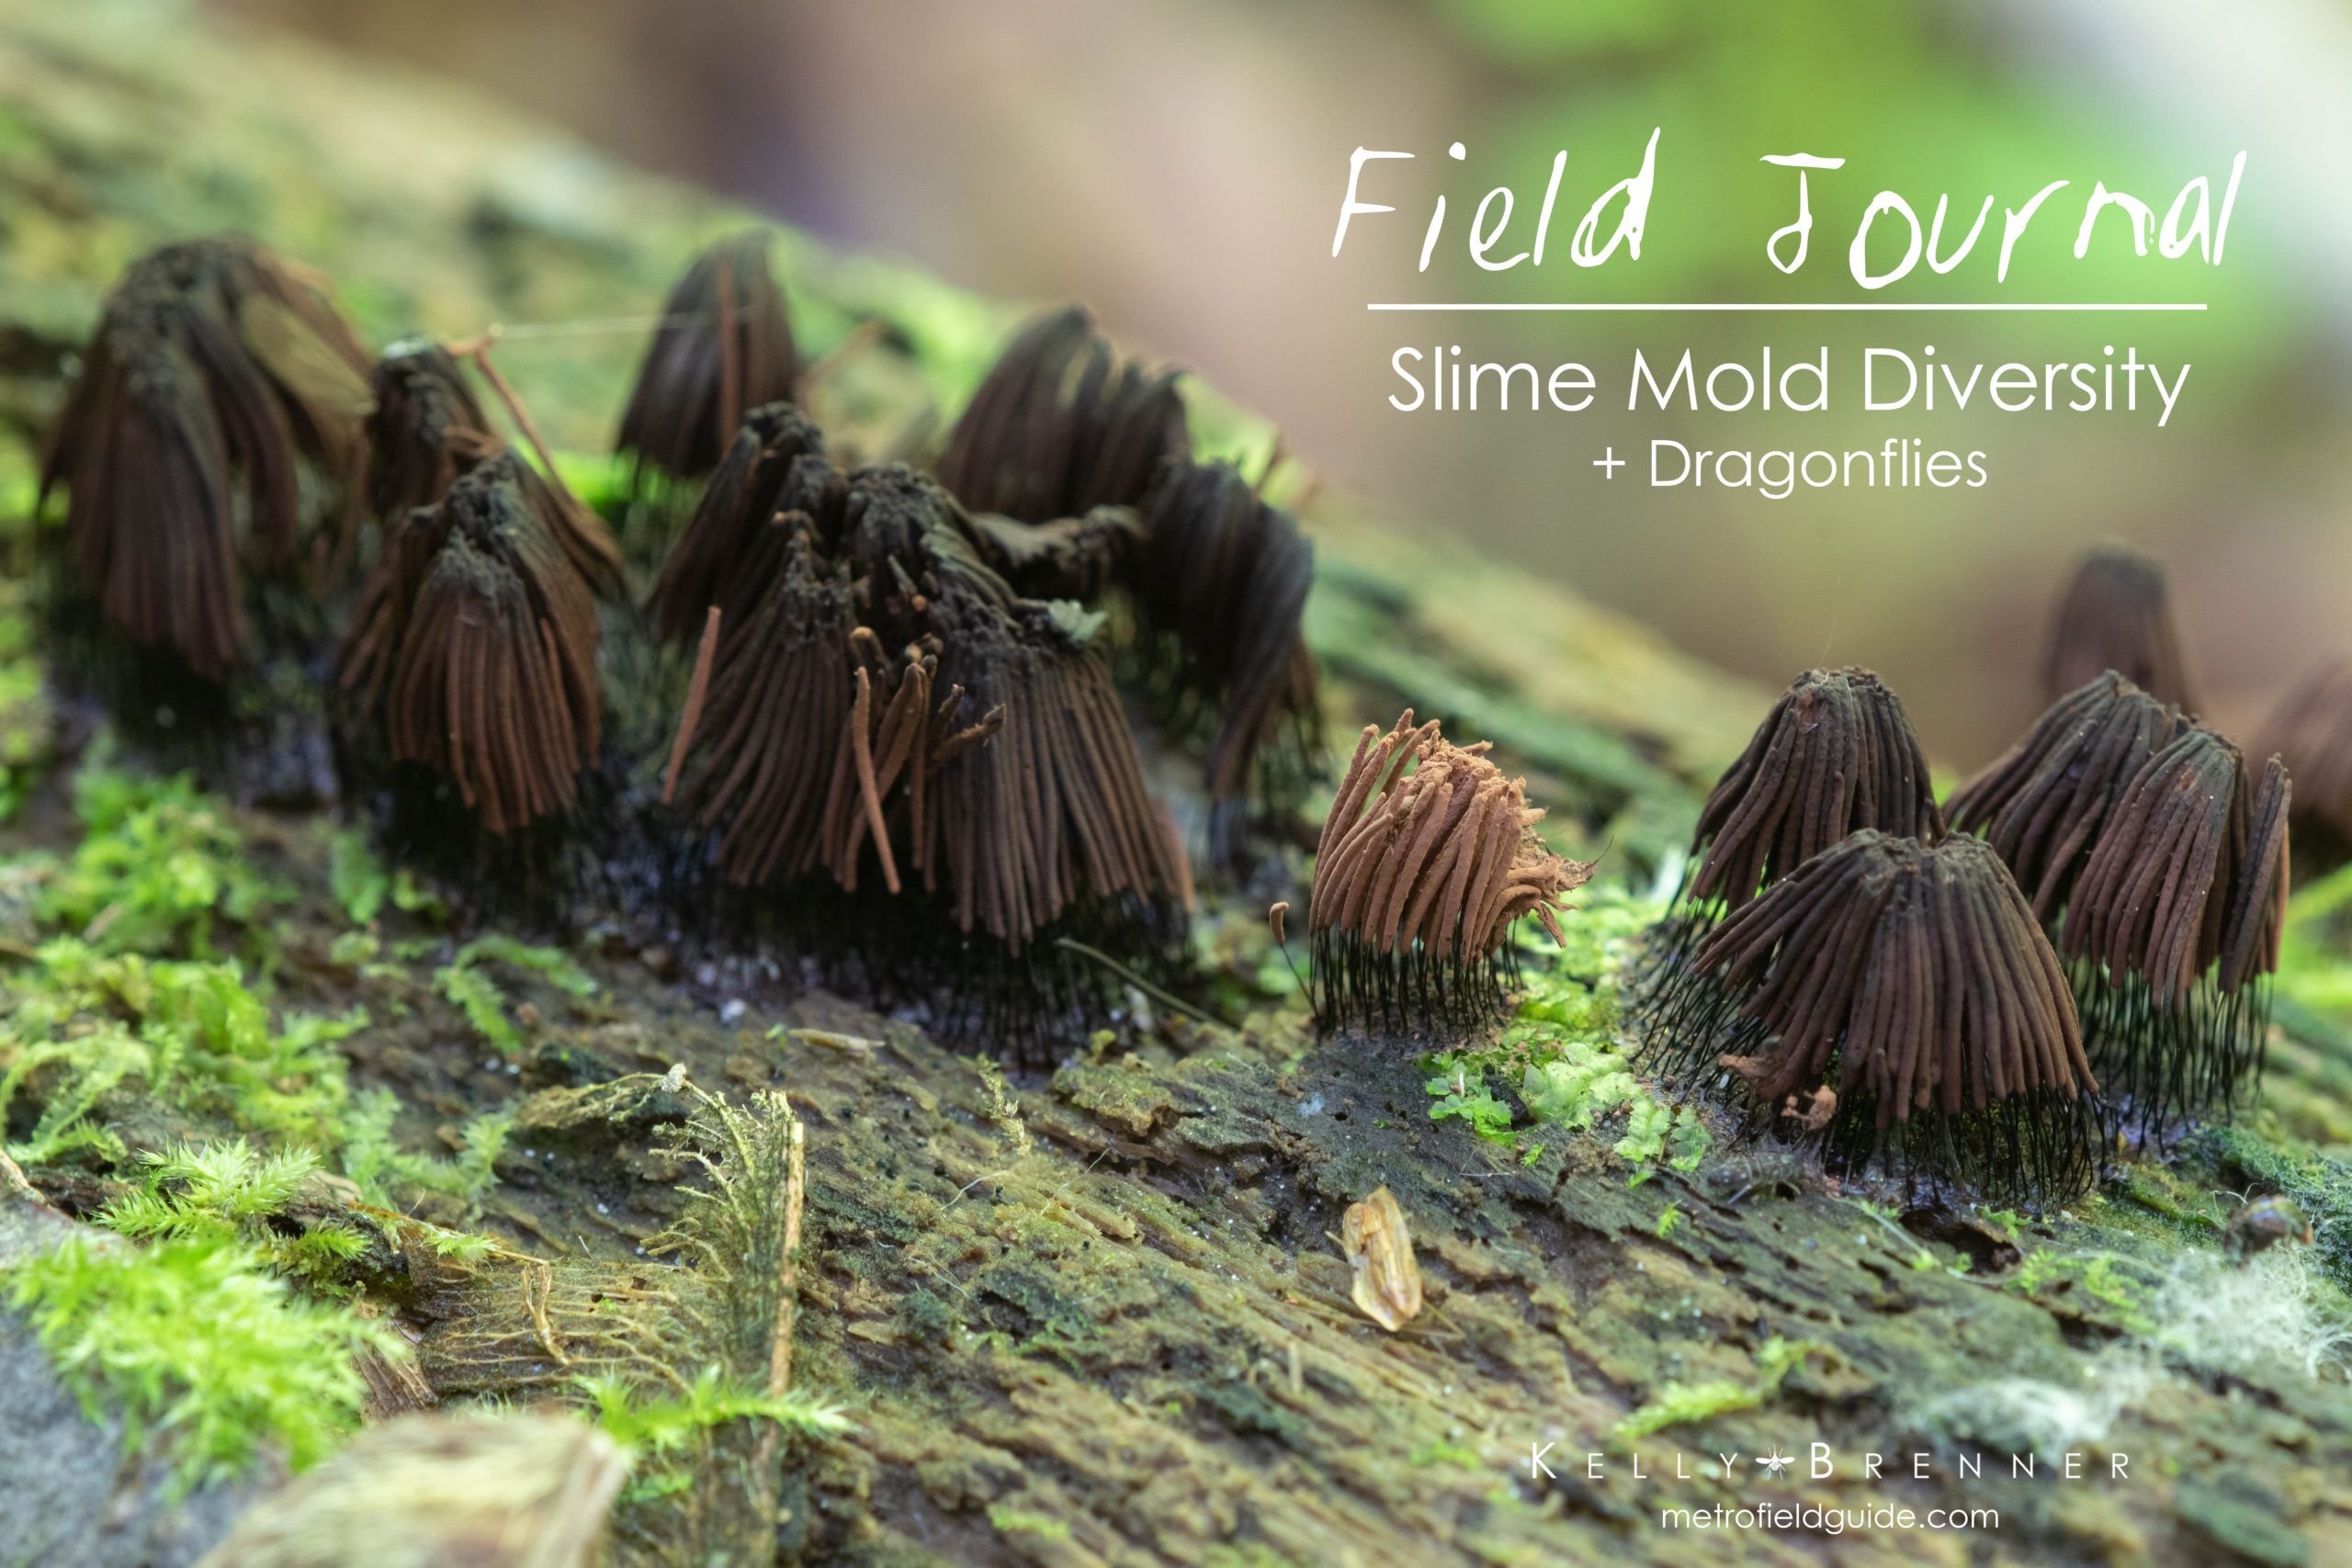 Field Journal: Slime Mold Diversity + Dragonflies